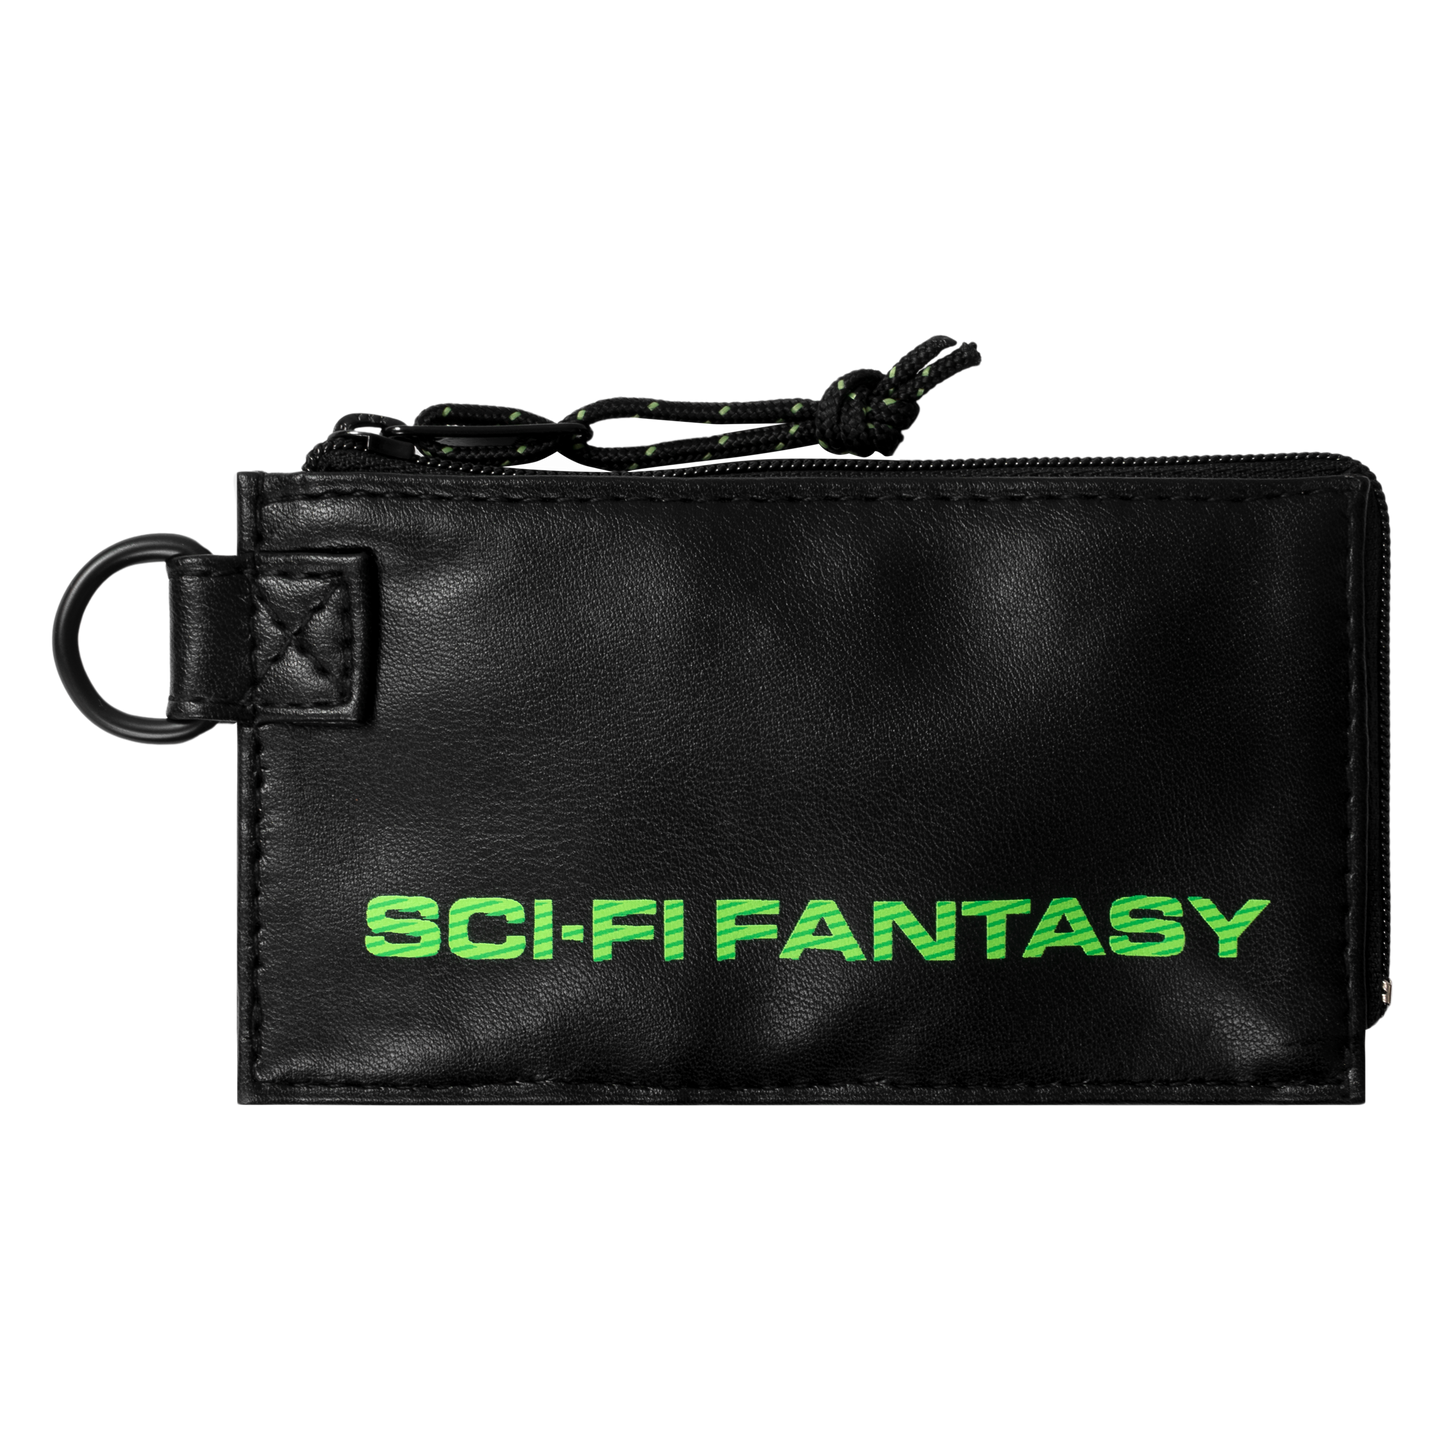 Sci-Fi Fantasy Card Holder - Black